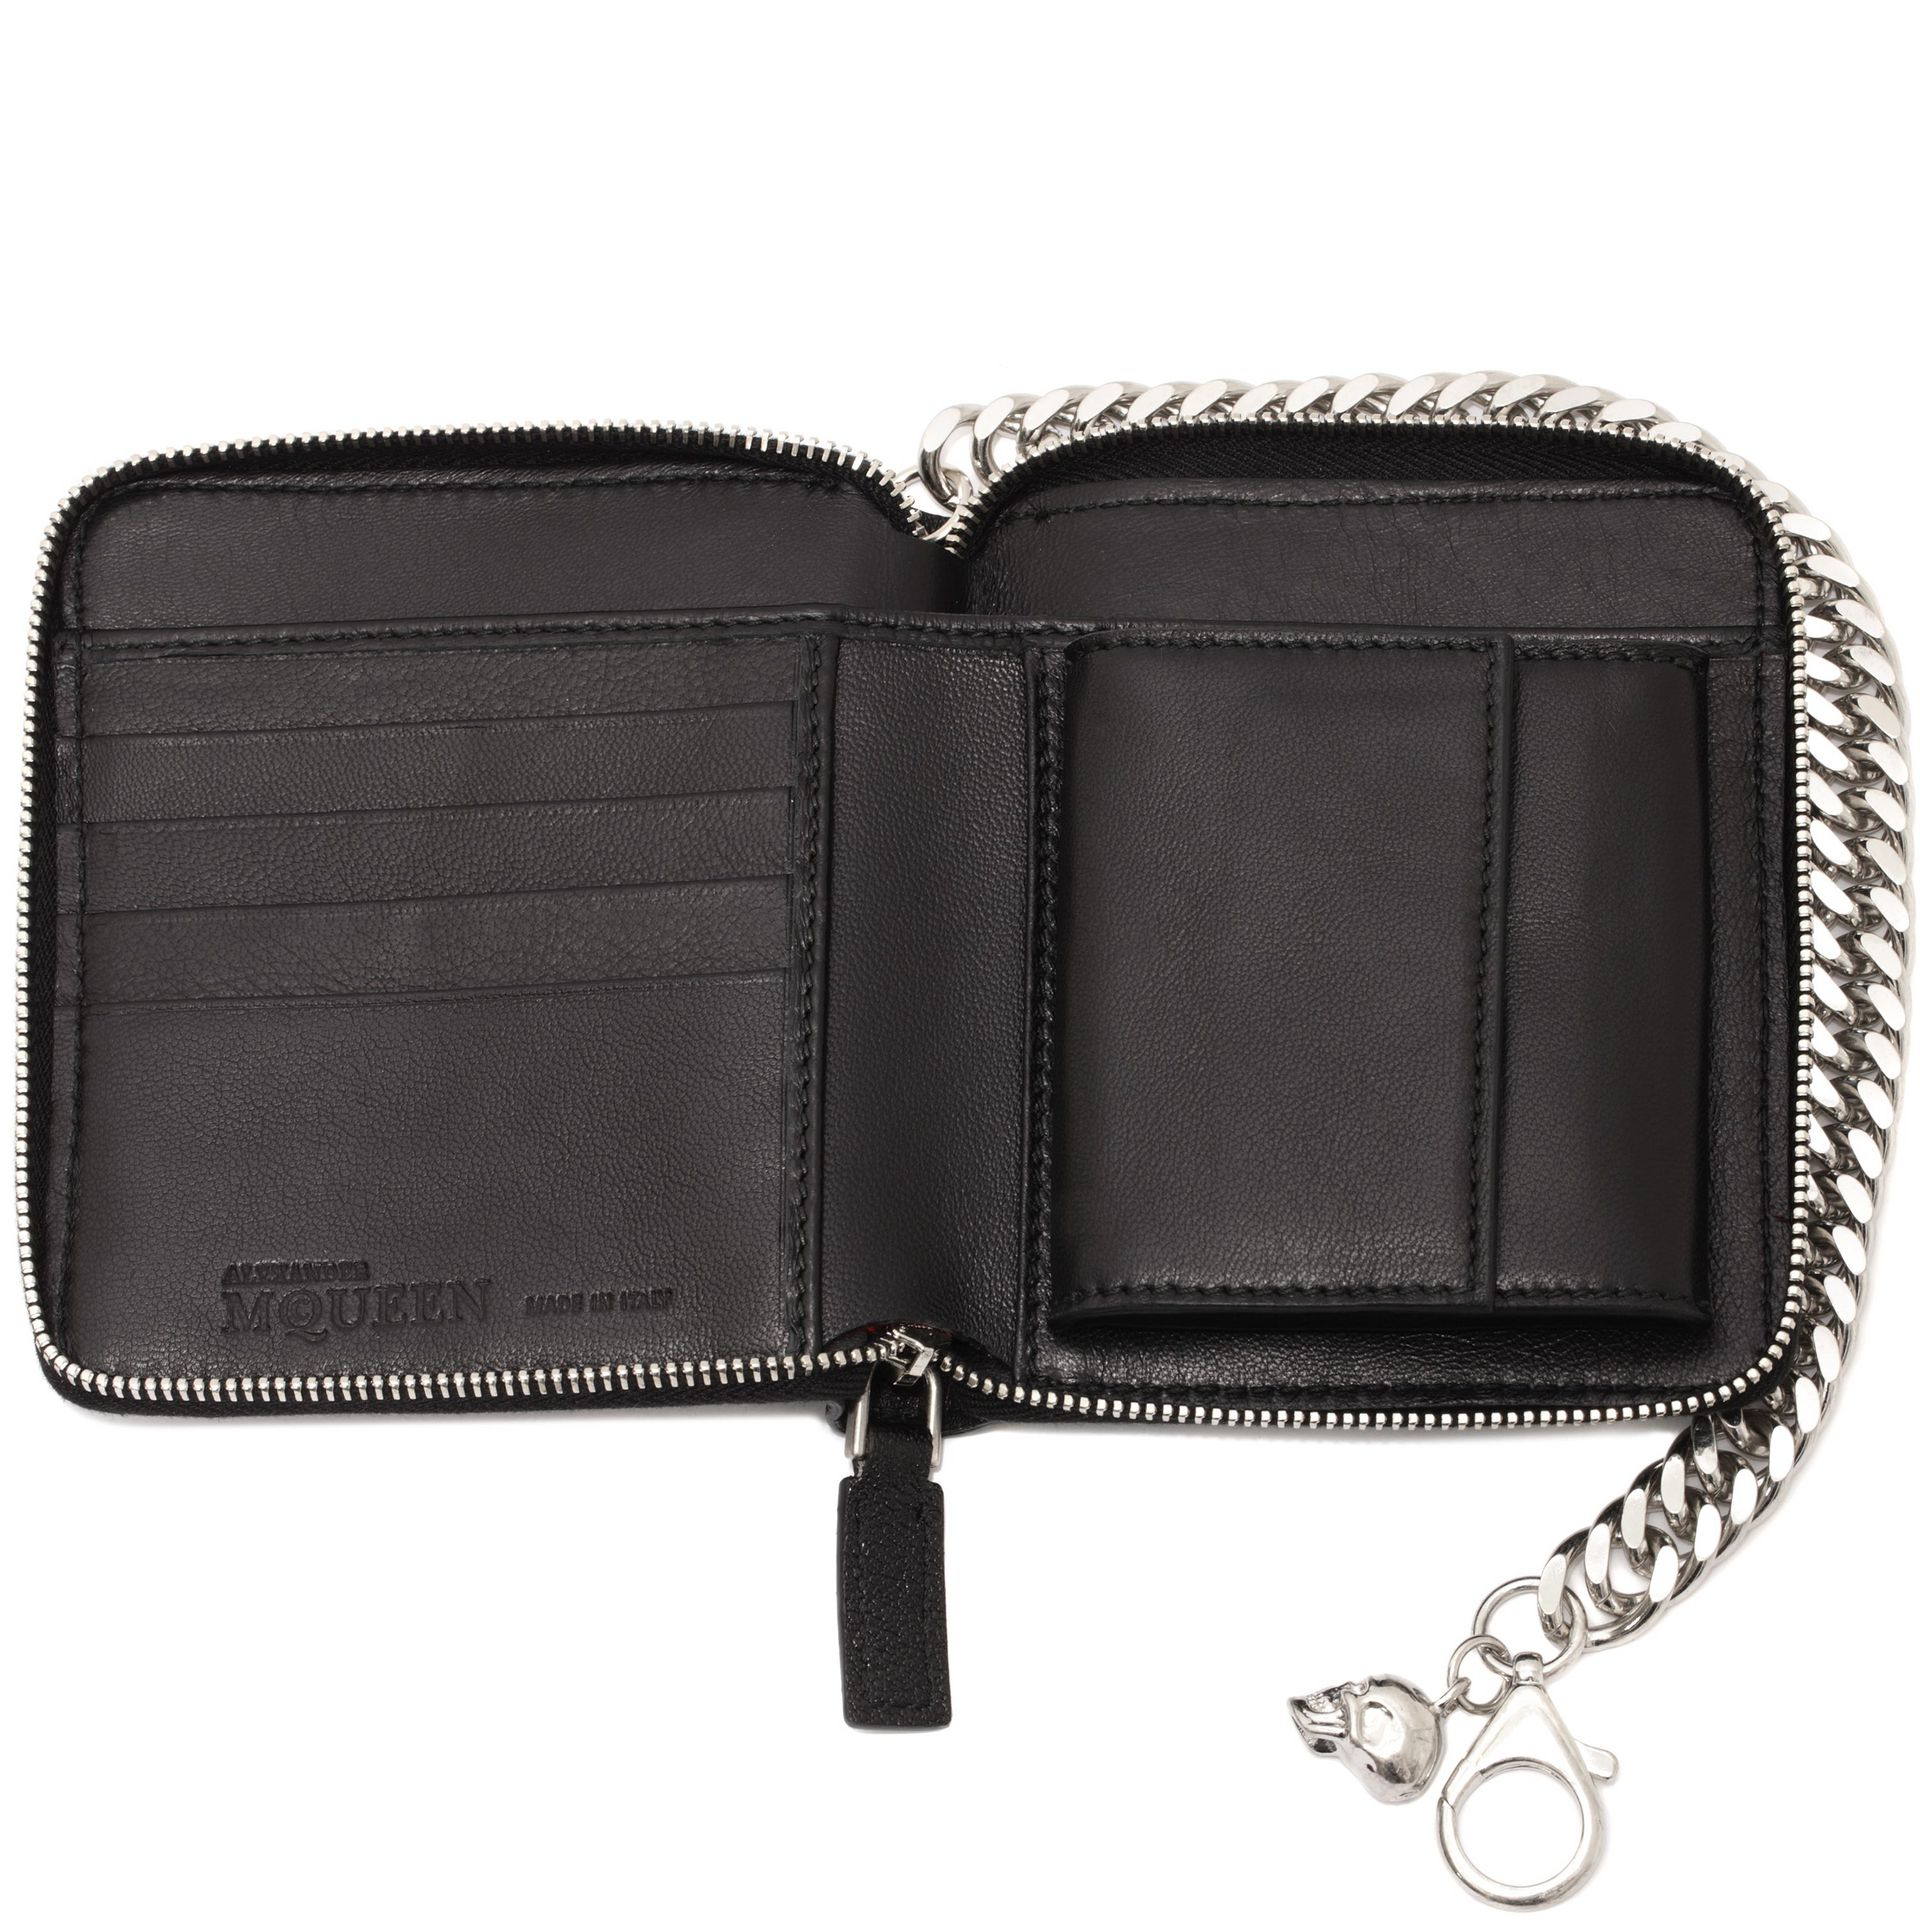 Lyst - Alexander mcqueen Leather Chain Wallet in Black